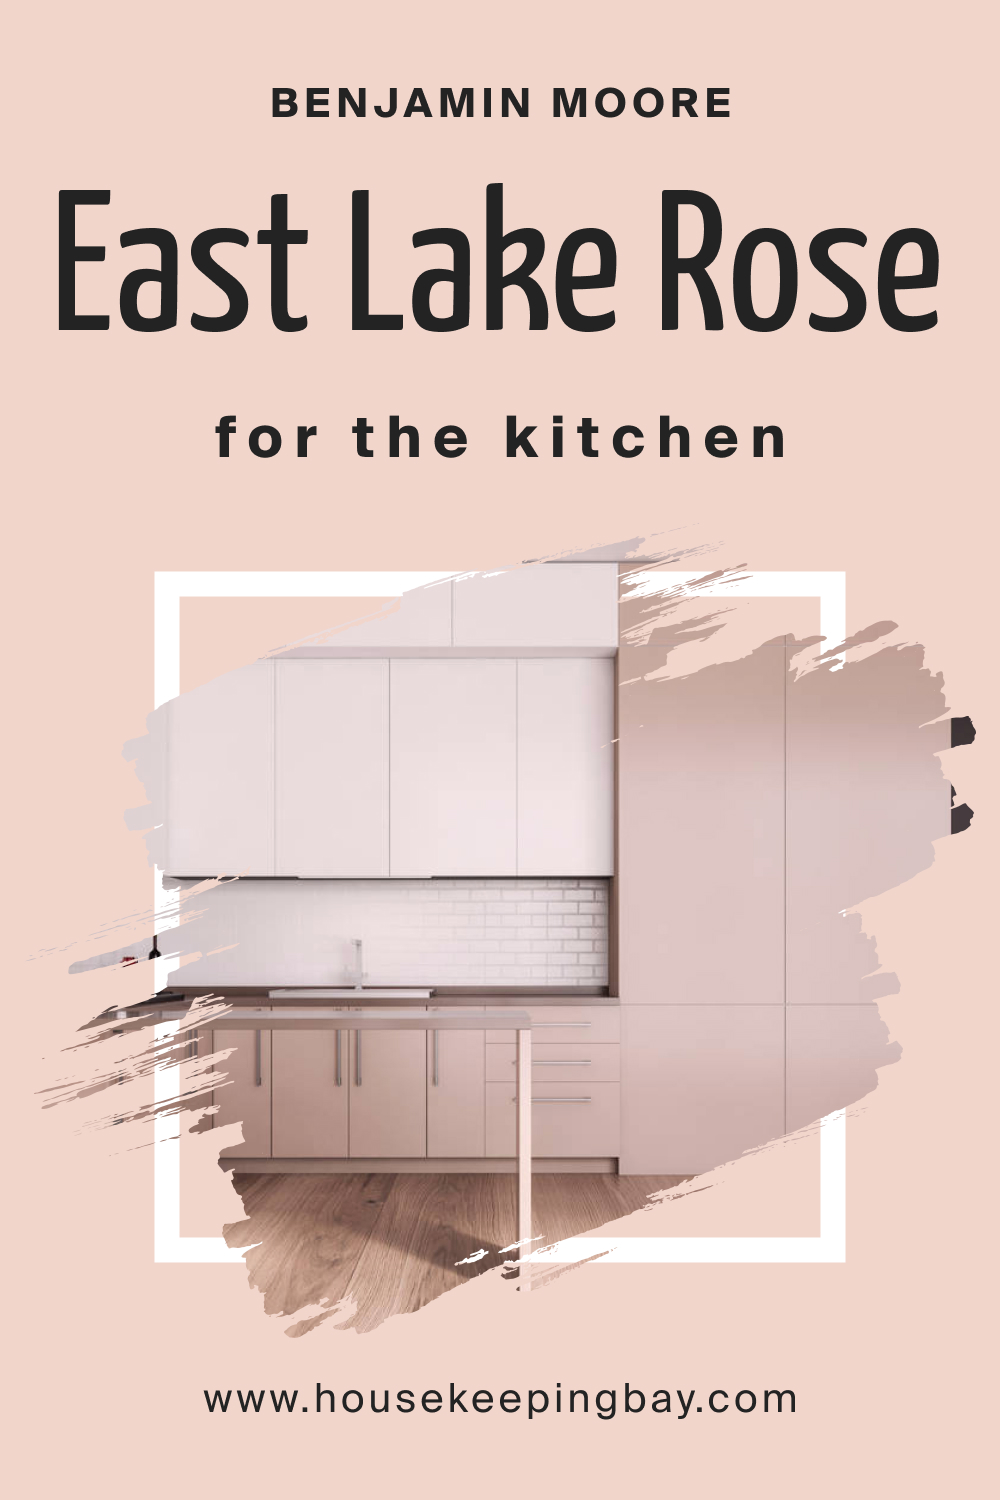 Benjamin Moore. BM East Lake Rose 043 for the Kitchen